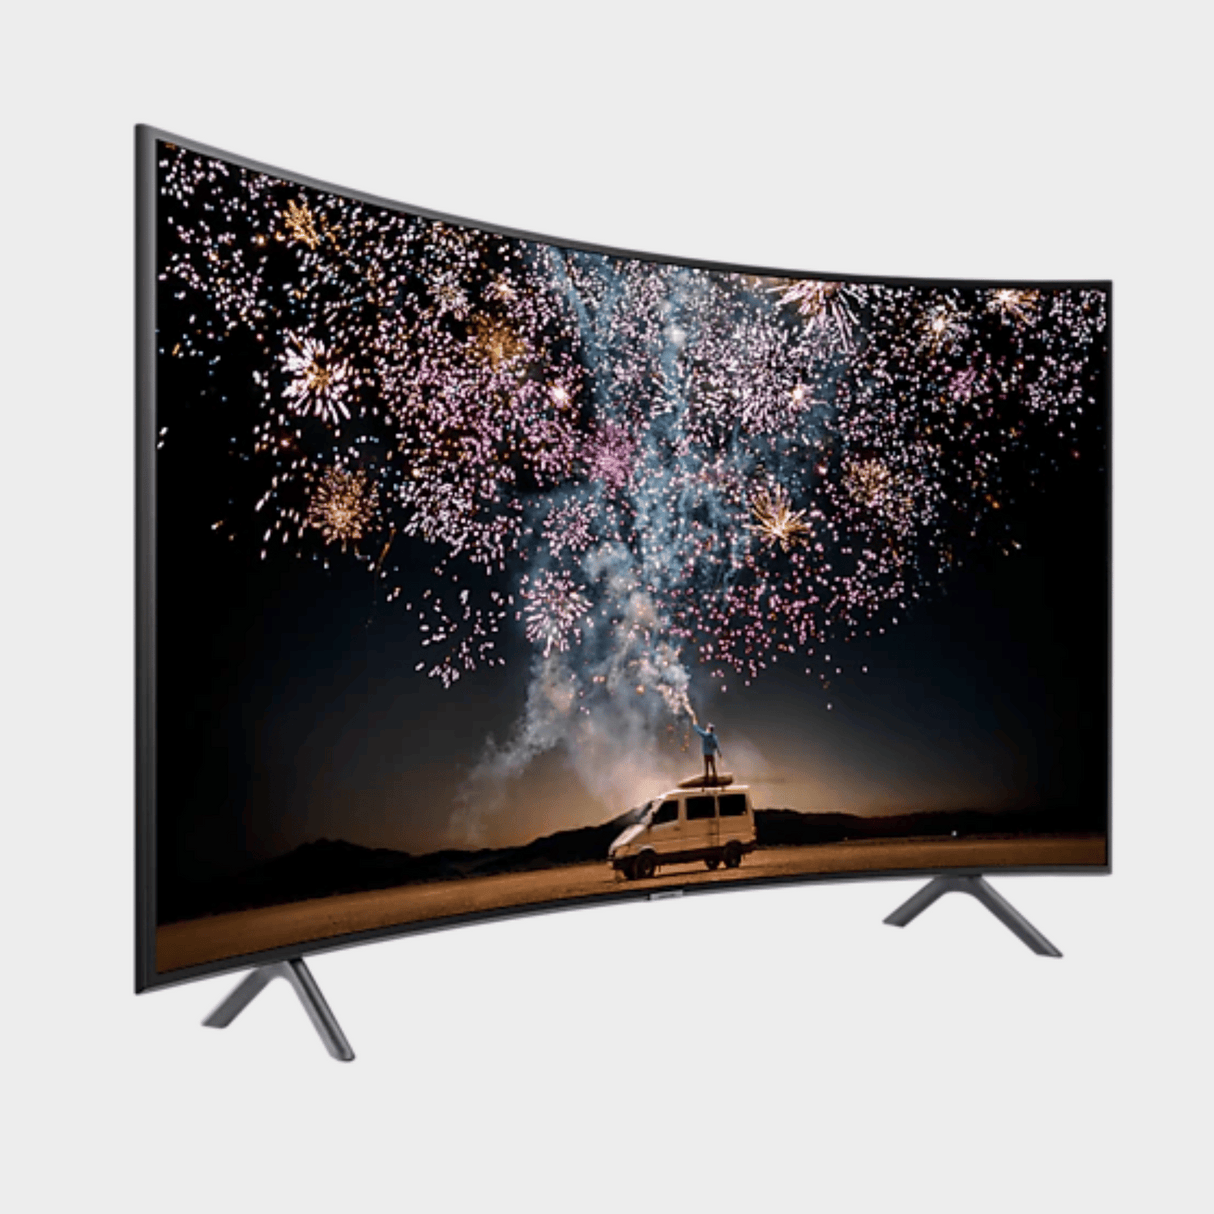 Samsung 49" Curved 4K UHD Smart TV UA49RU7300, Curved Screen, Bluetooth, HDMI With Inbuilt Digital Receiver – Black